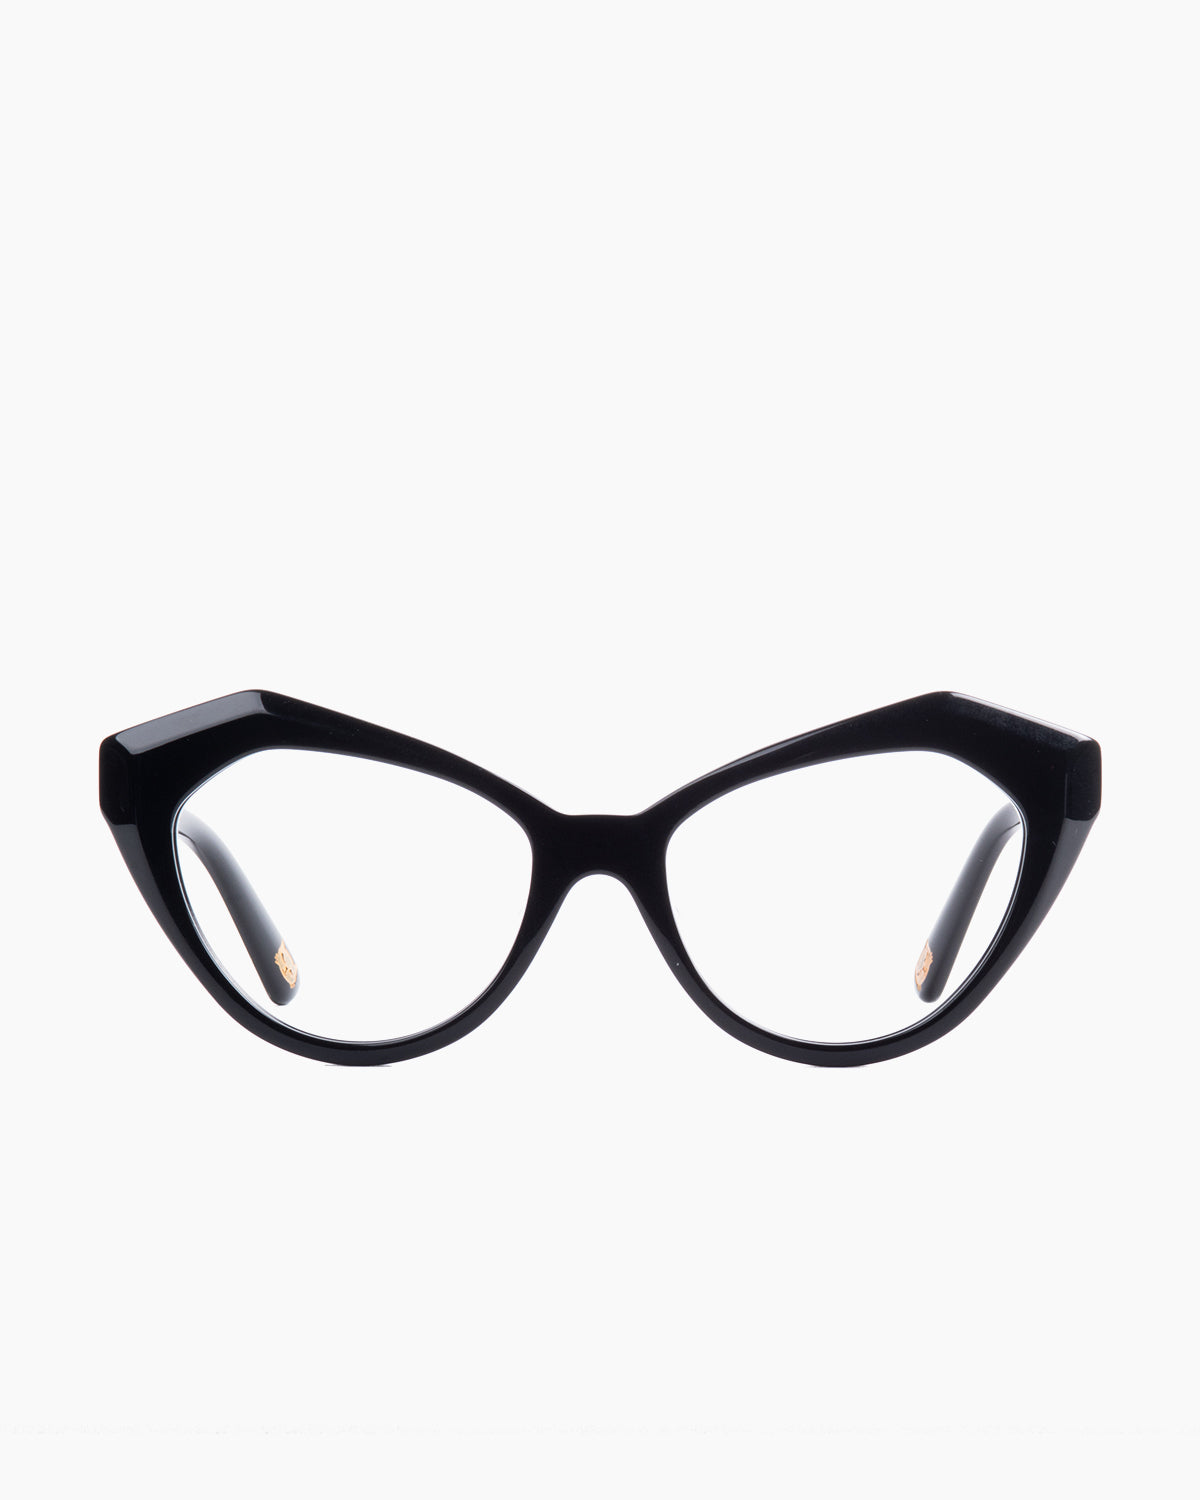 Spectacleeyeworks - Ayalah - c306 | glasses bar:  Marie-Sophie Dion